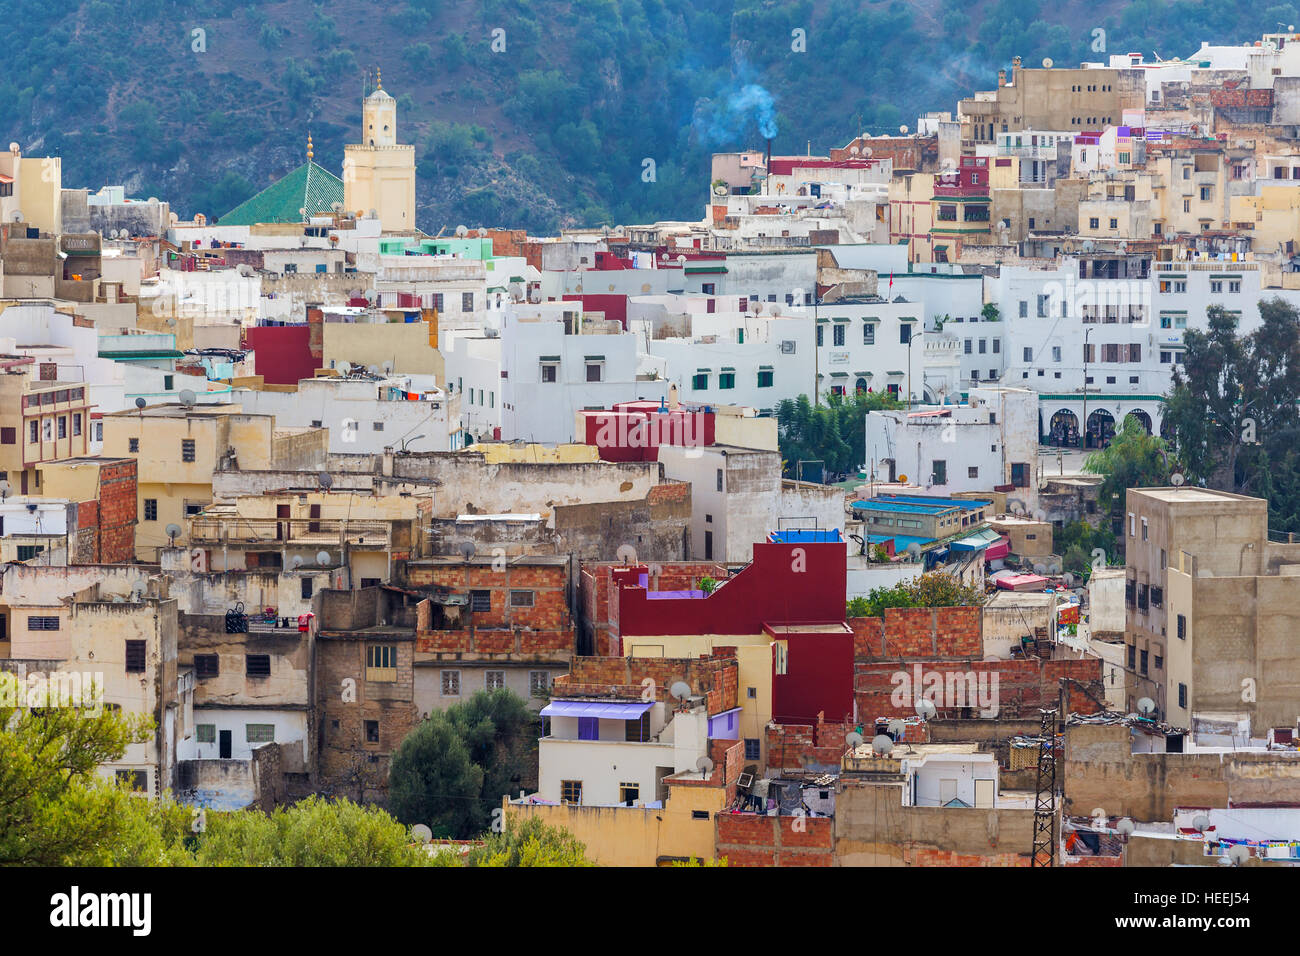 Vue de la ville, Moulay Idriss, Maroc Banque D'Images